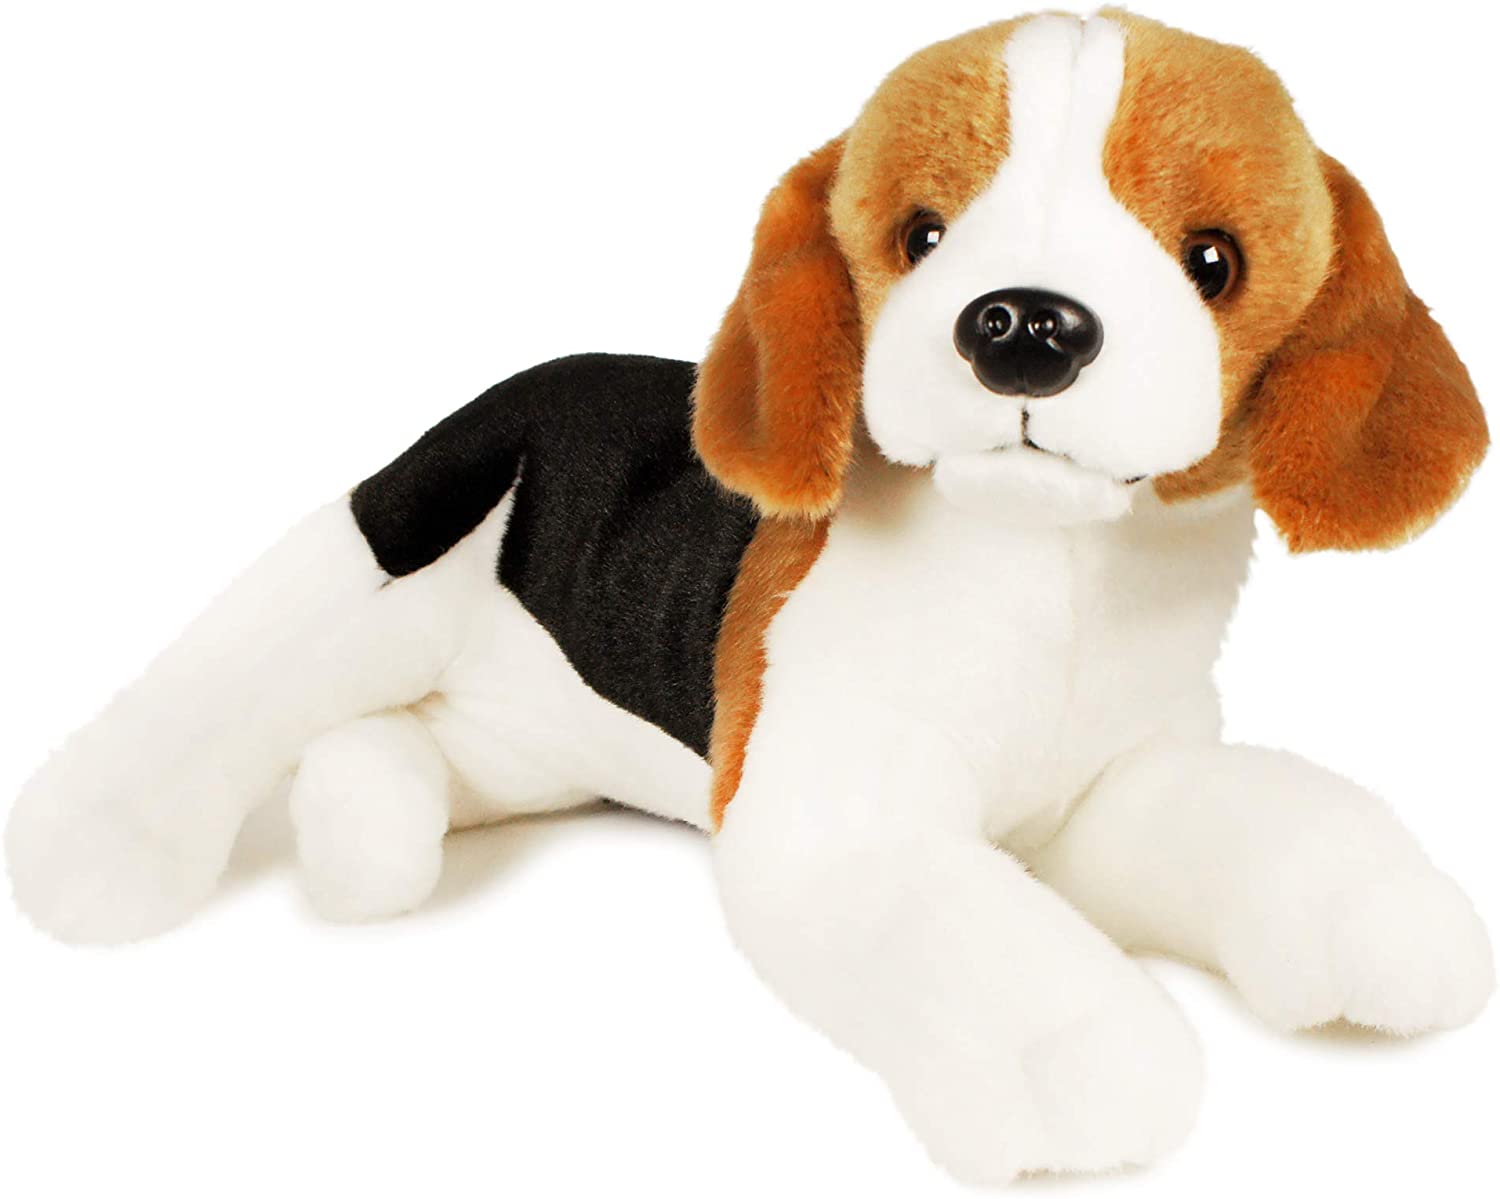 Burkham the Beagle12 Inch Stuffed Animal Plush DogBy Tiger Tale Toys 